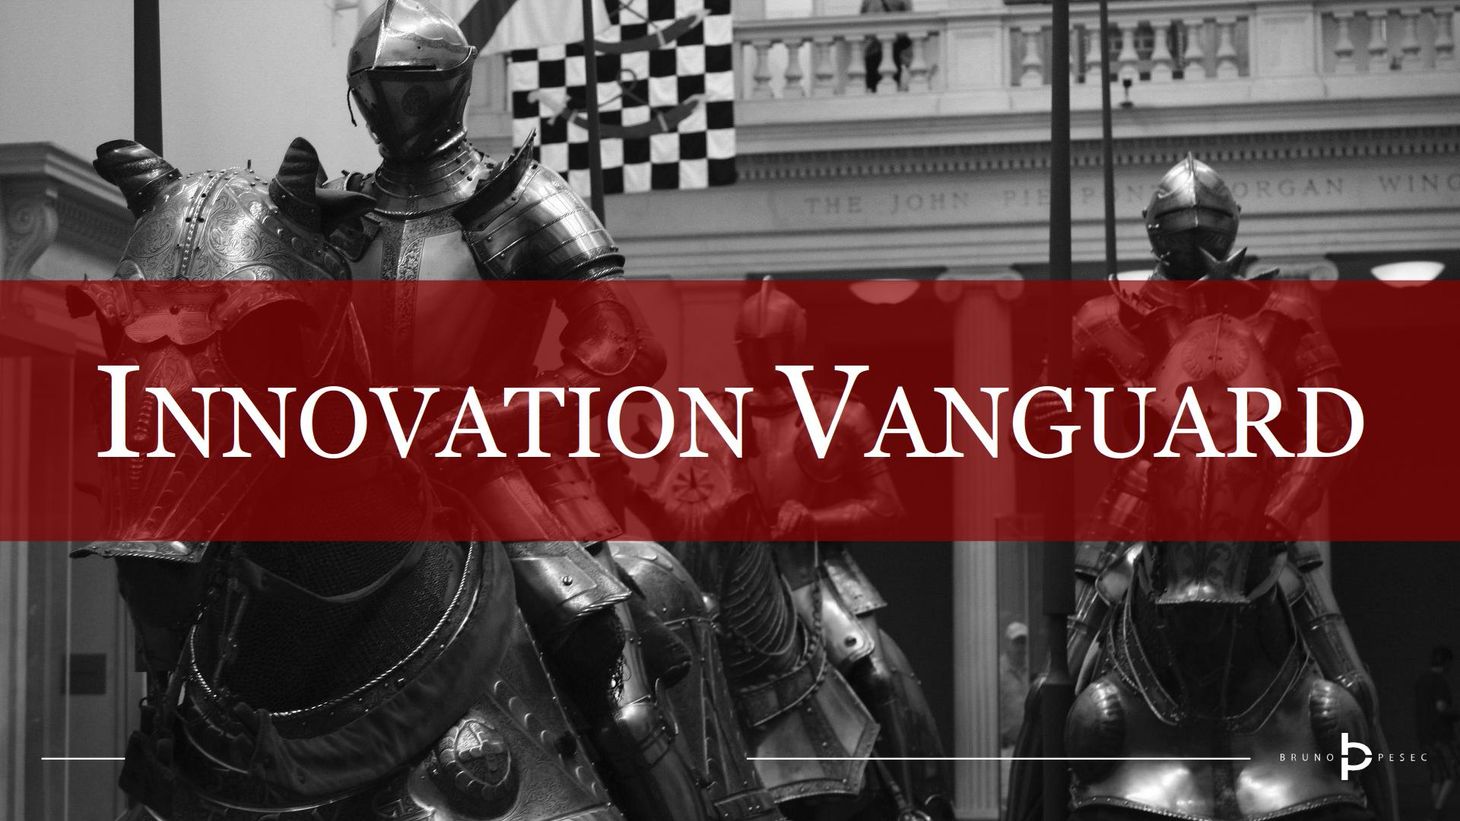 Innovation vanguard